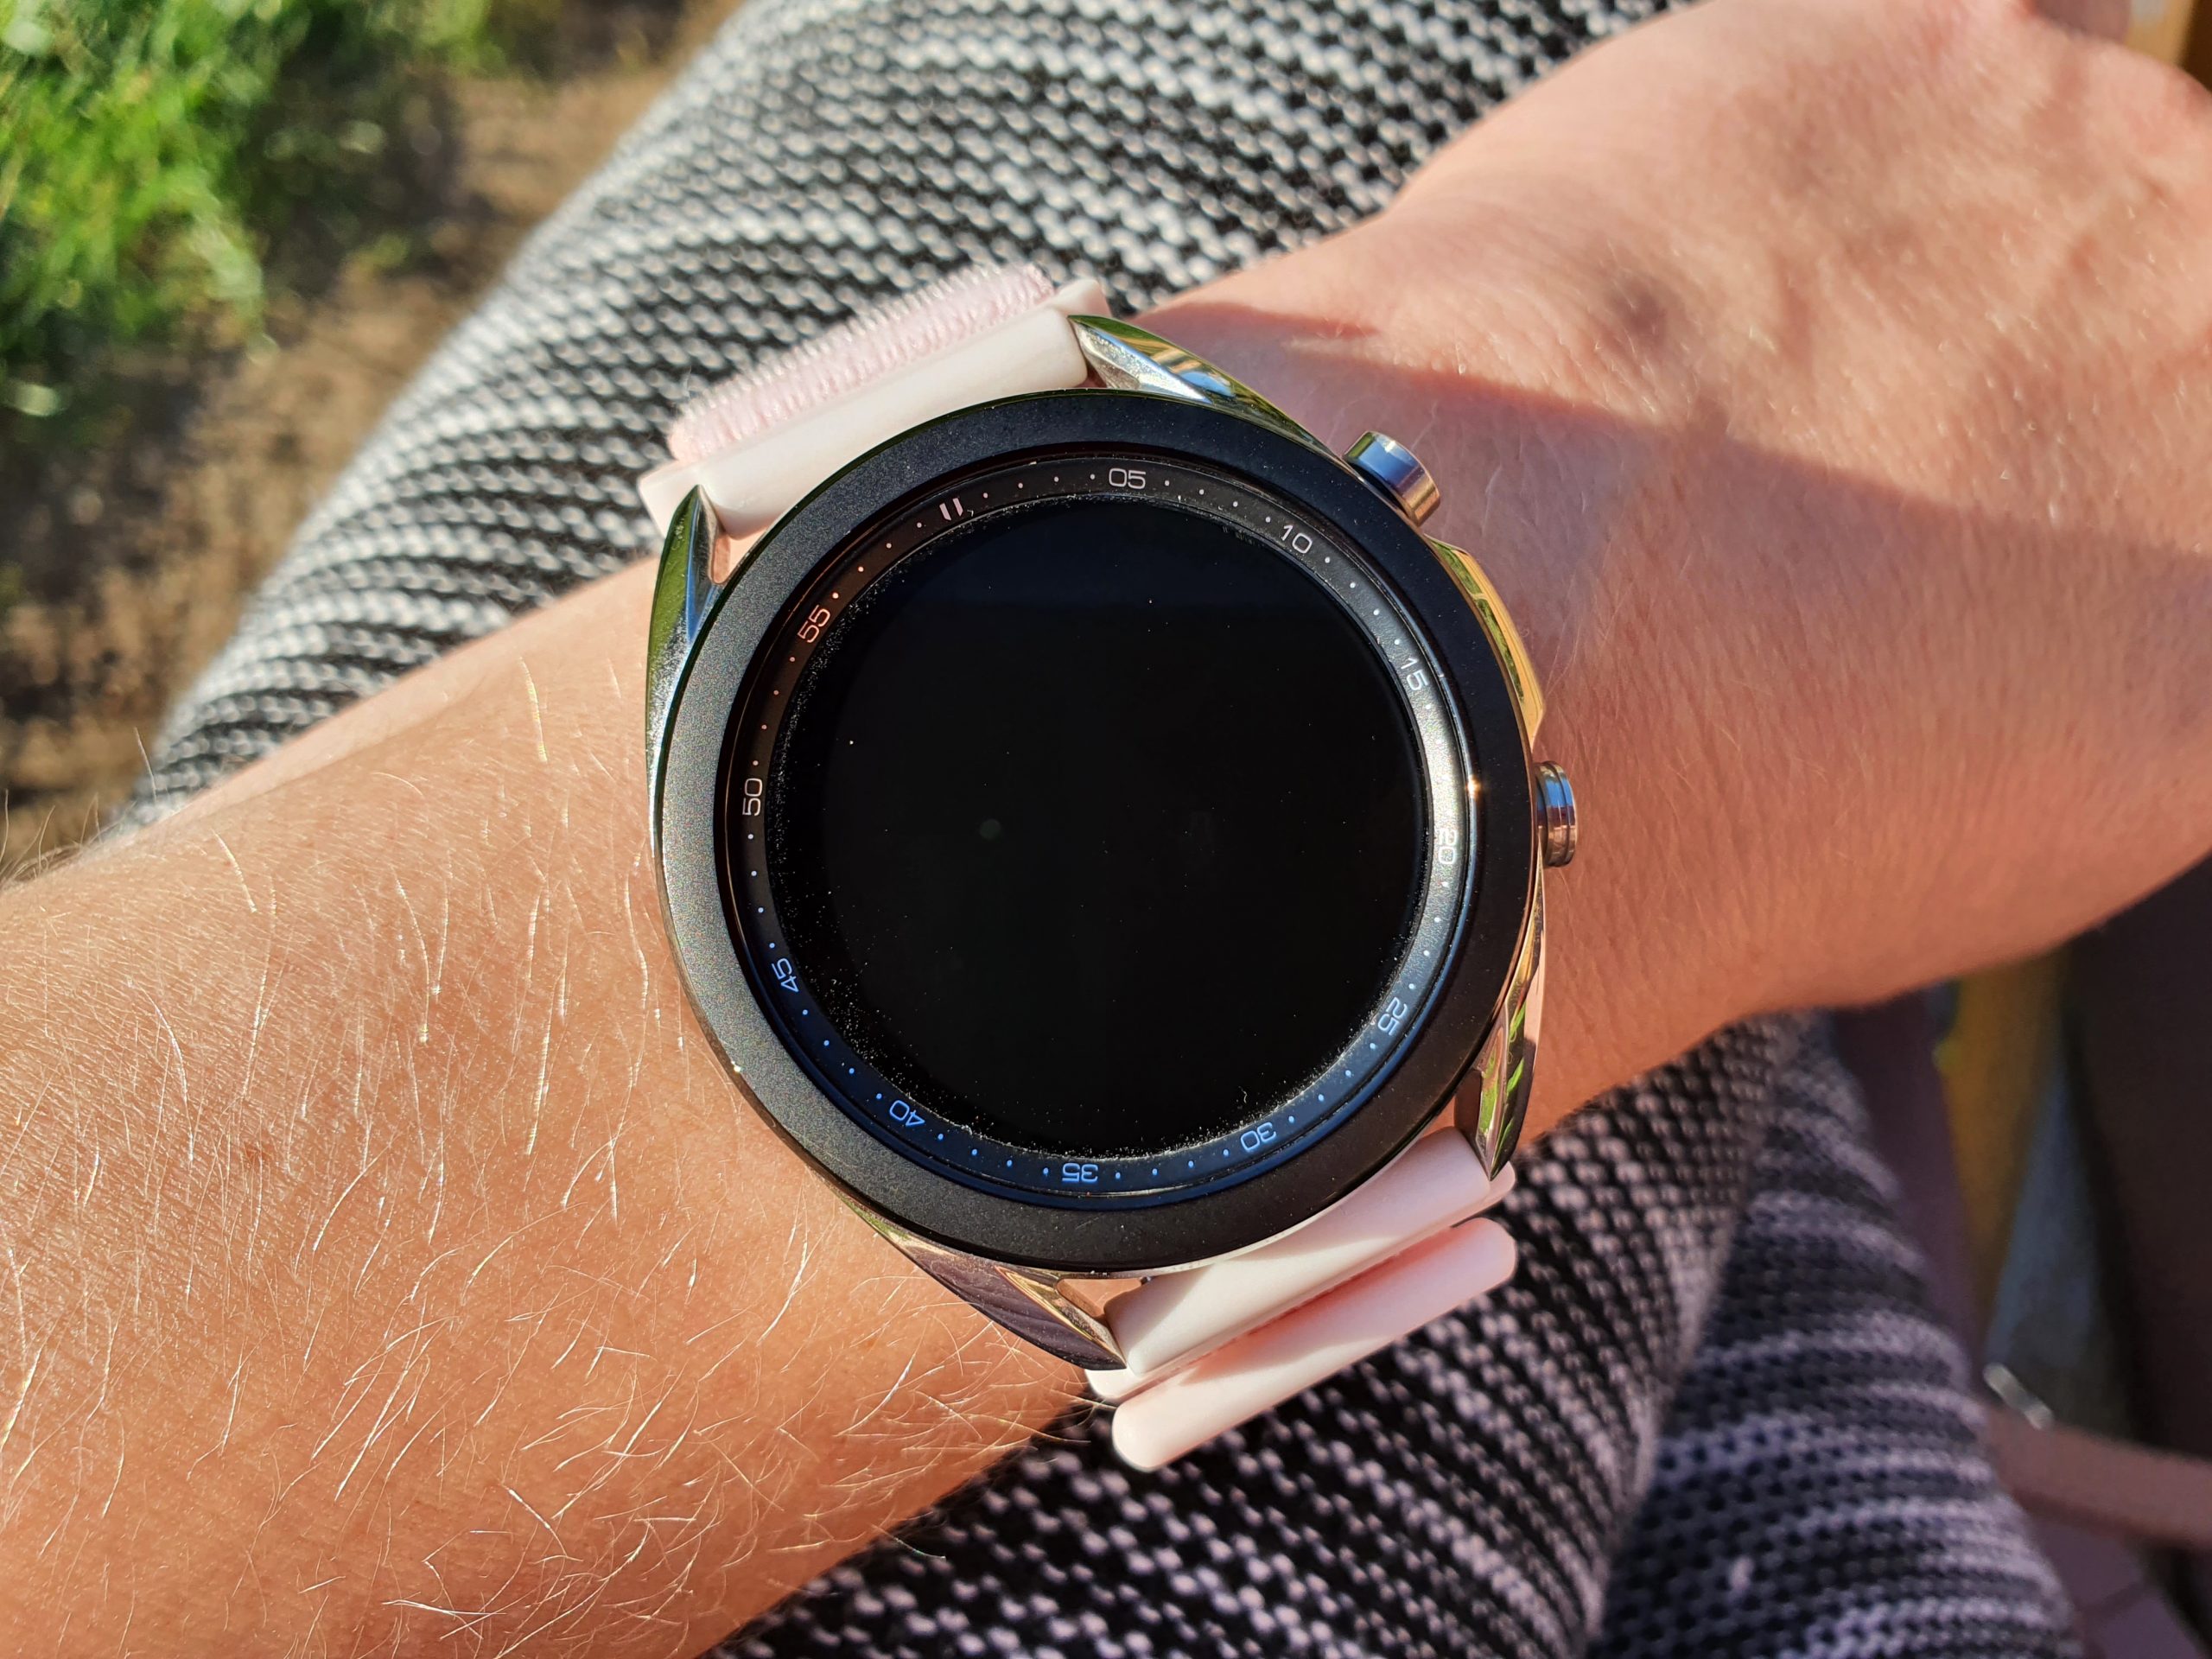 Galaxy watch esim. Безель Samsung Galaxy watch. Безель для самсунг галакси вотч 46 мм. Galaxy Wear 3. Самсунг галакси вотч безель использование.